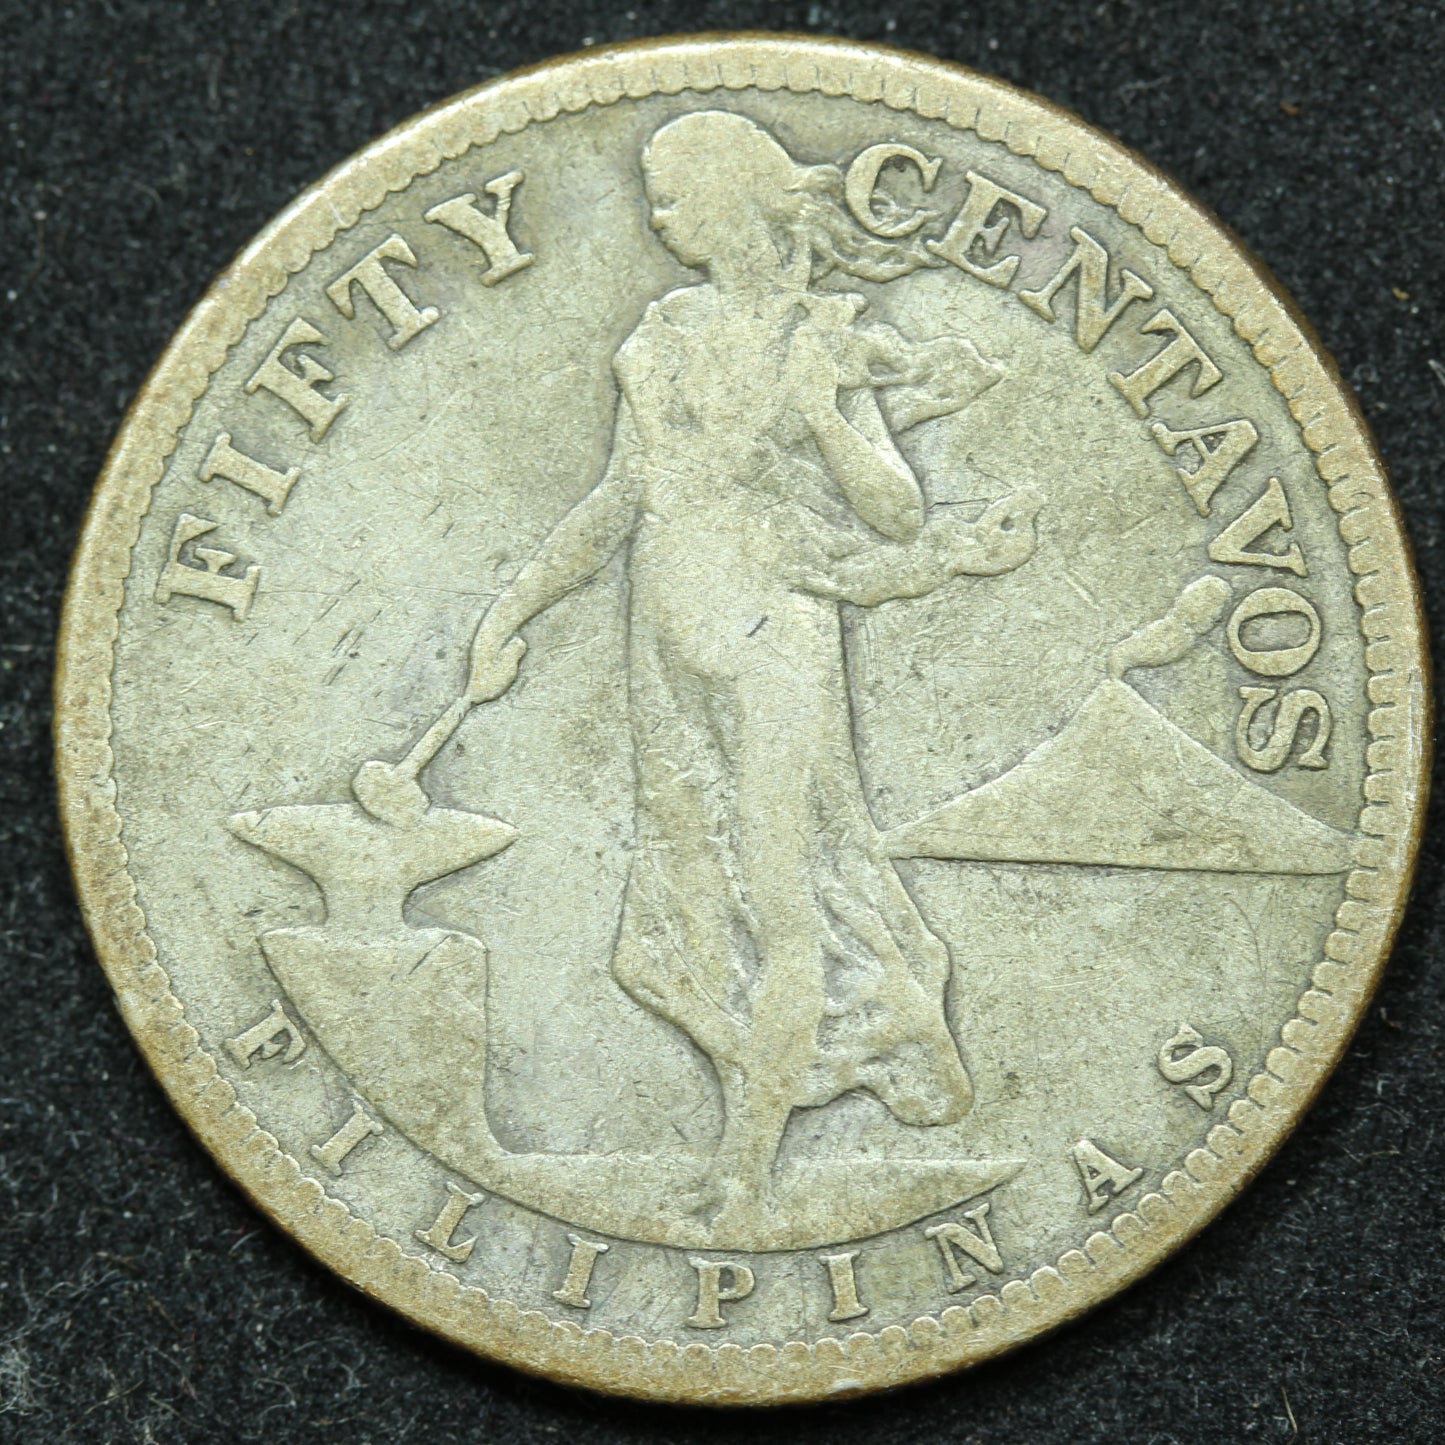 1908 S 50 Centavos Philippines Silver Coin - KM# 171